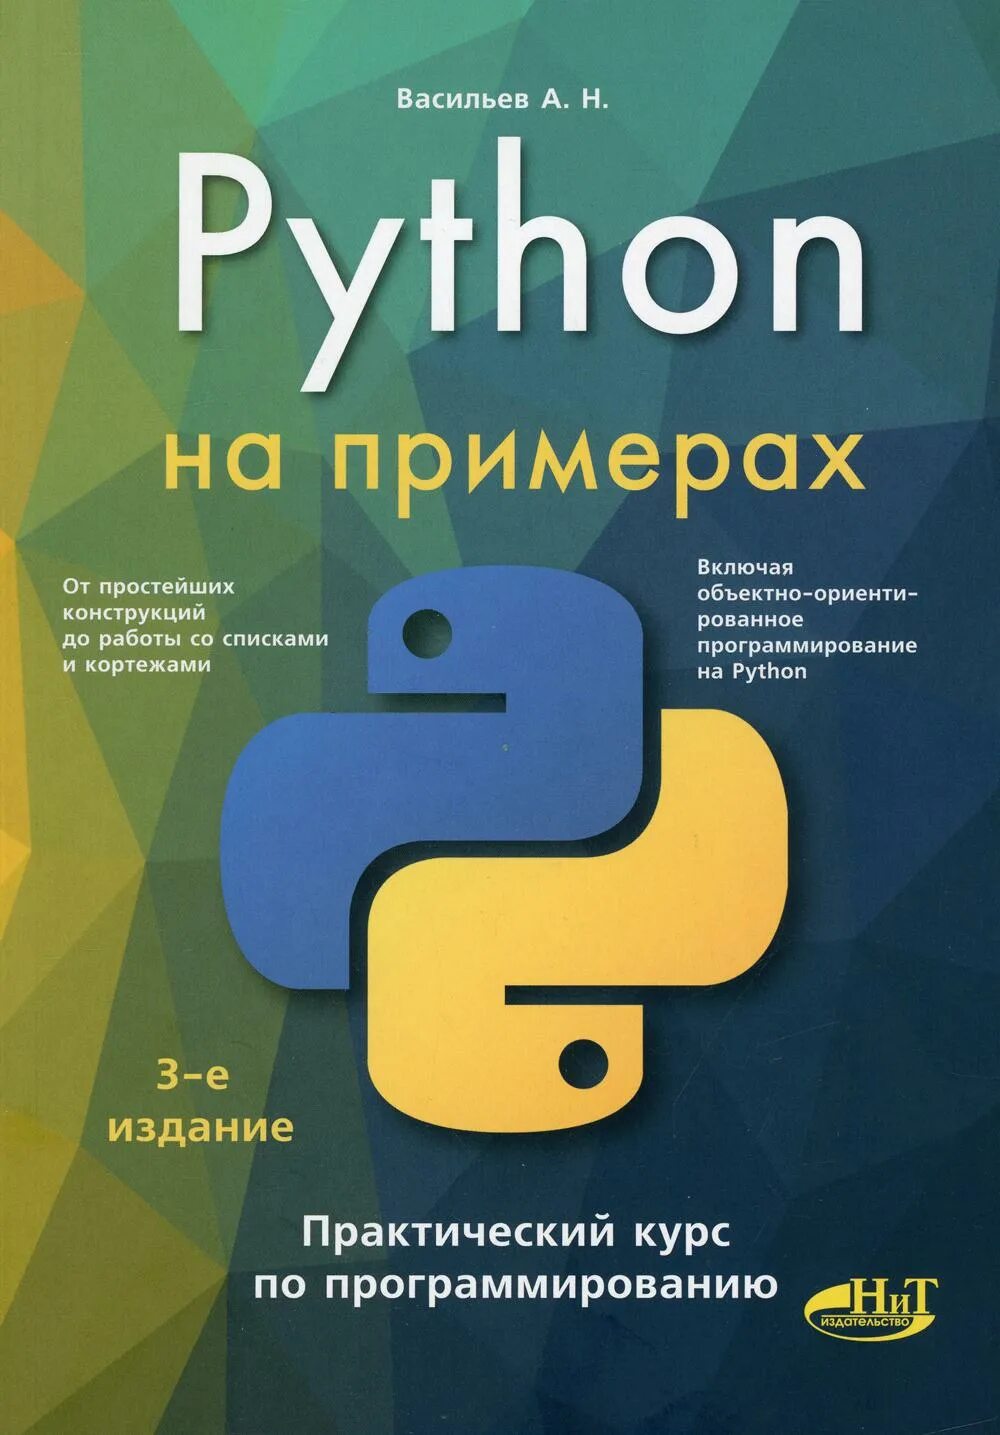 Курс python. Книга Васильев Пайтон. Книги по программированию. Книги по программированию на Python. Книга по программированию питон.